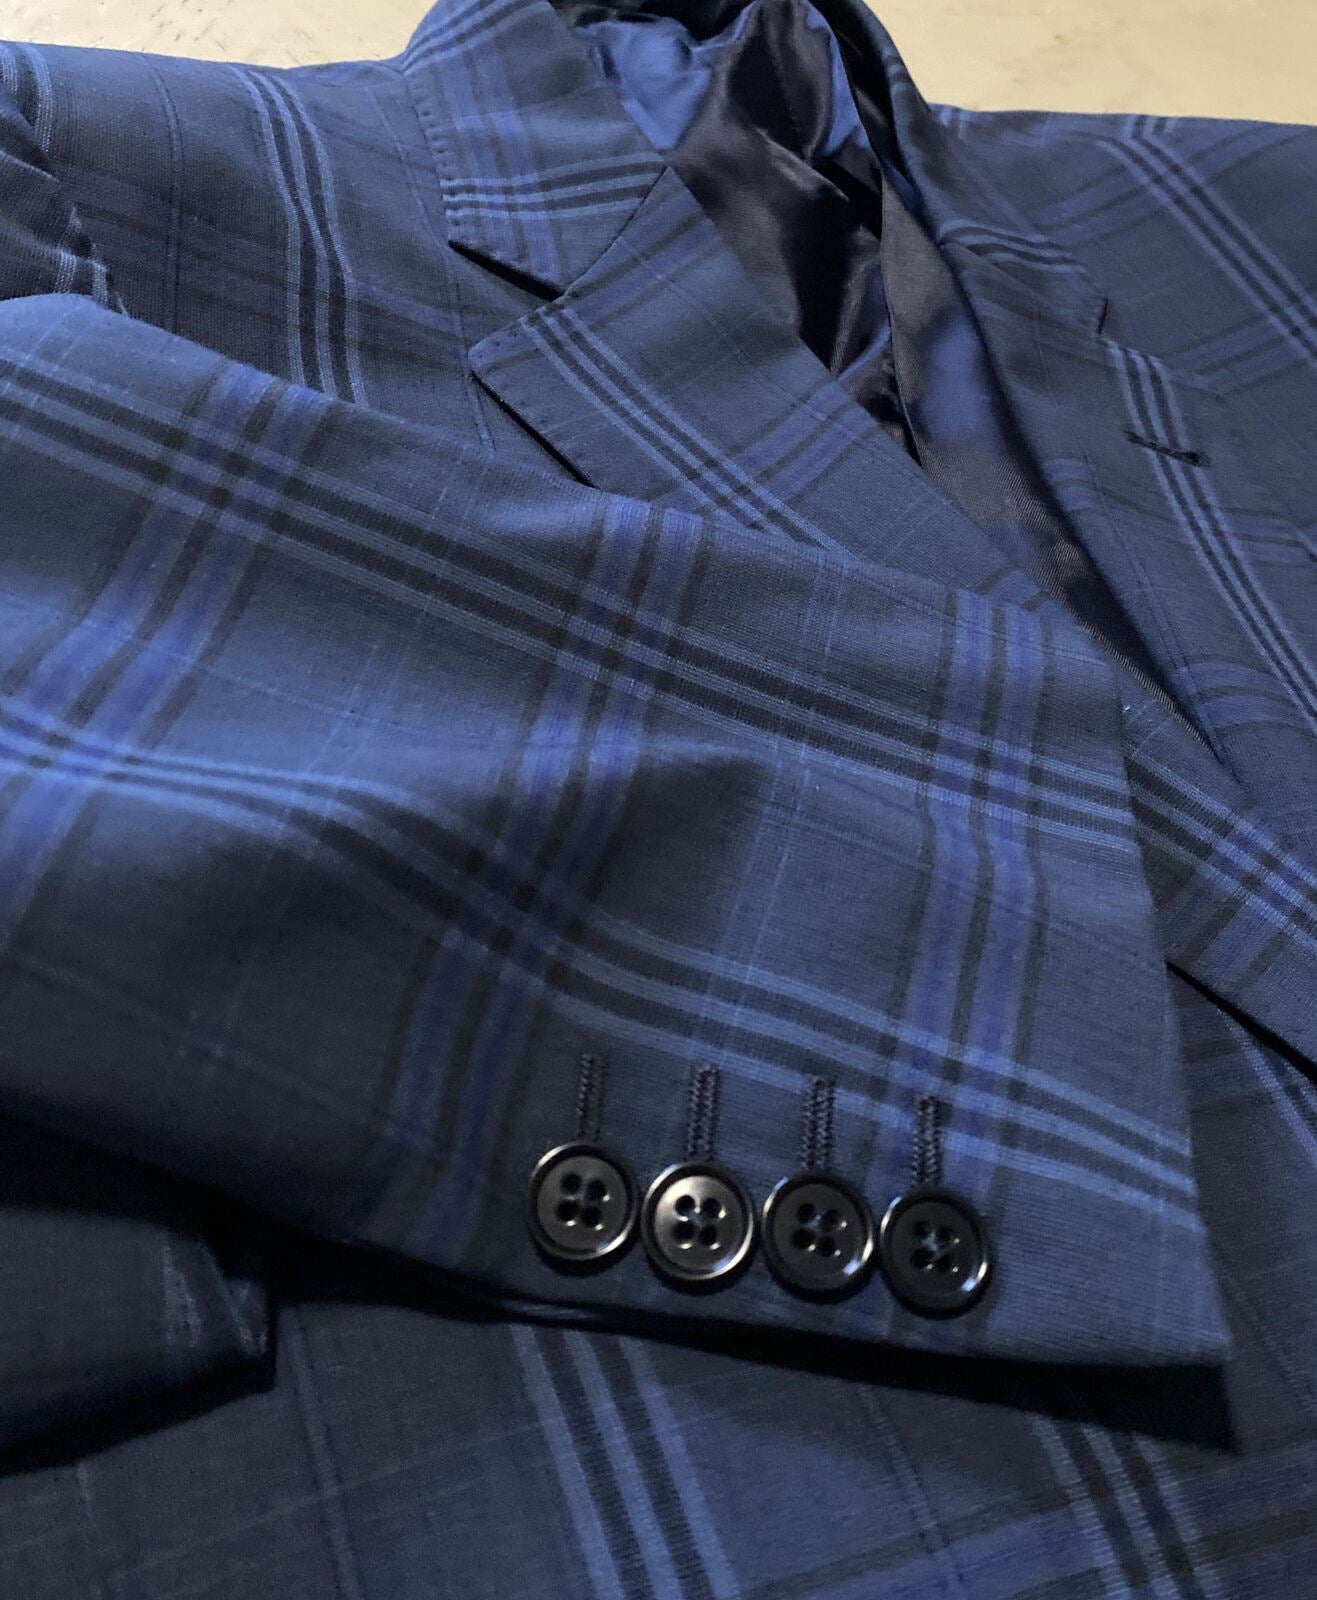 NWT $1495 Armani Collezioni Men Sport Coat Blazer Blue 42R US/52R Eu